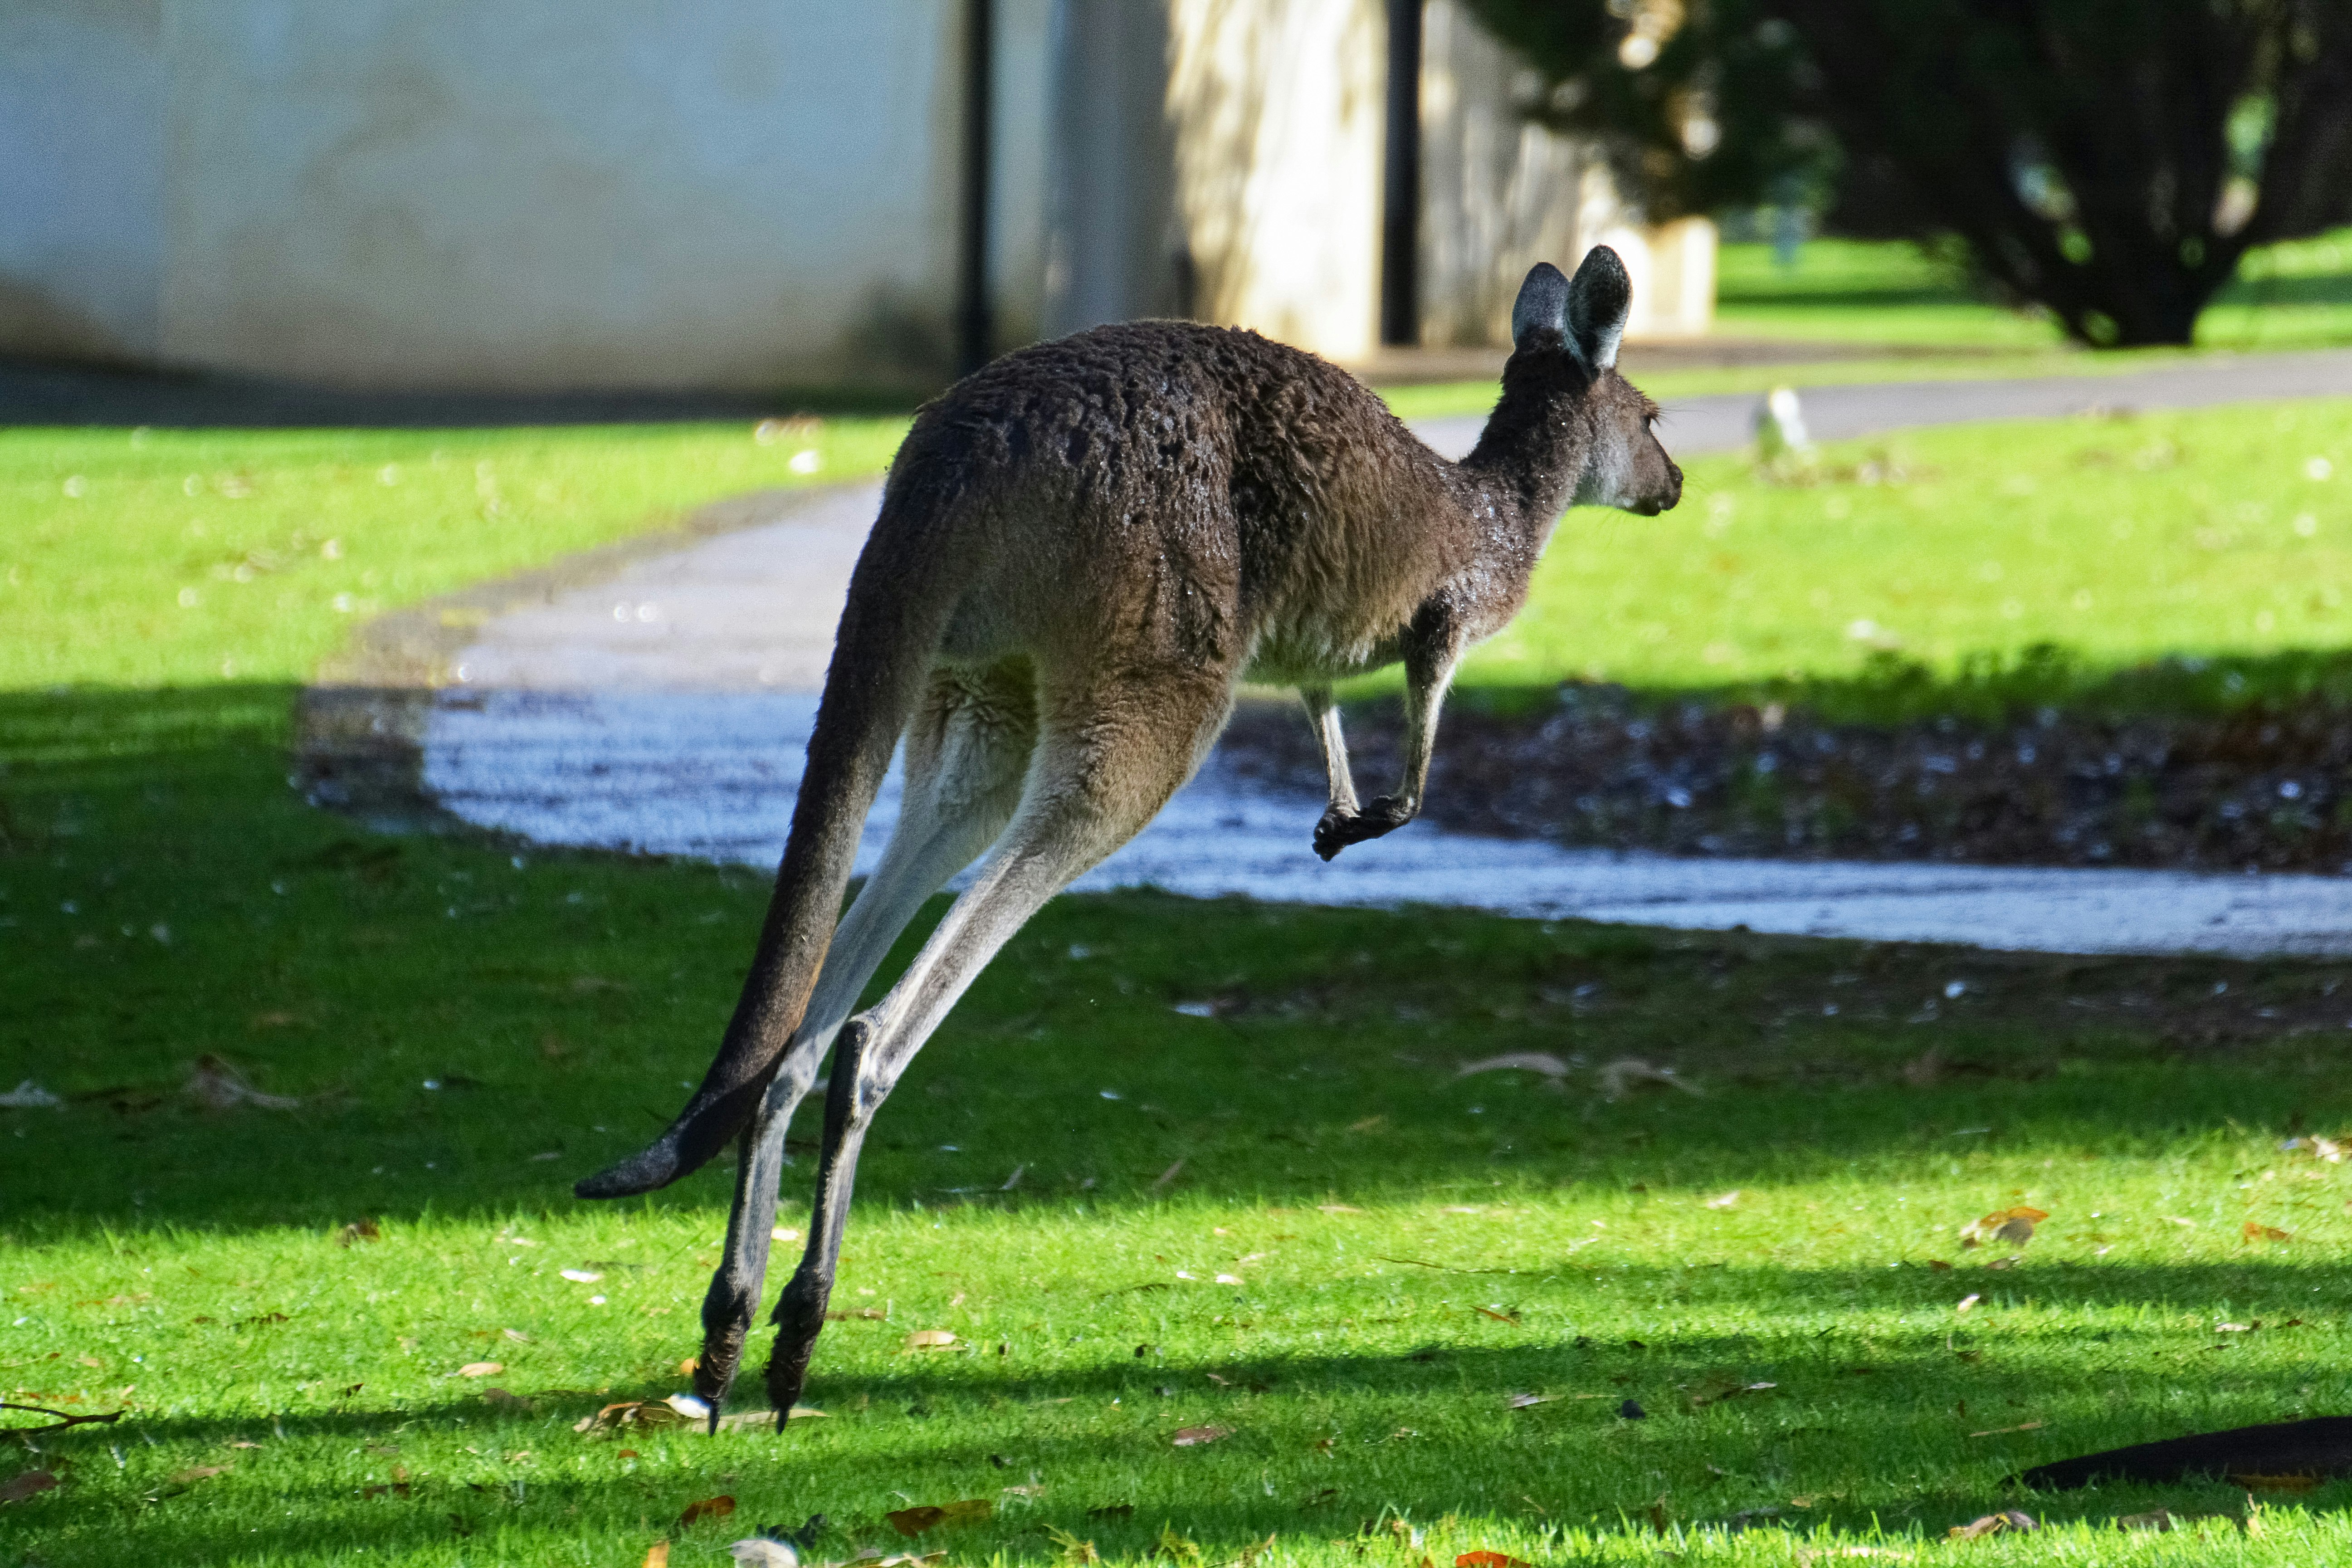 kangaroo on green grass field during daytime